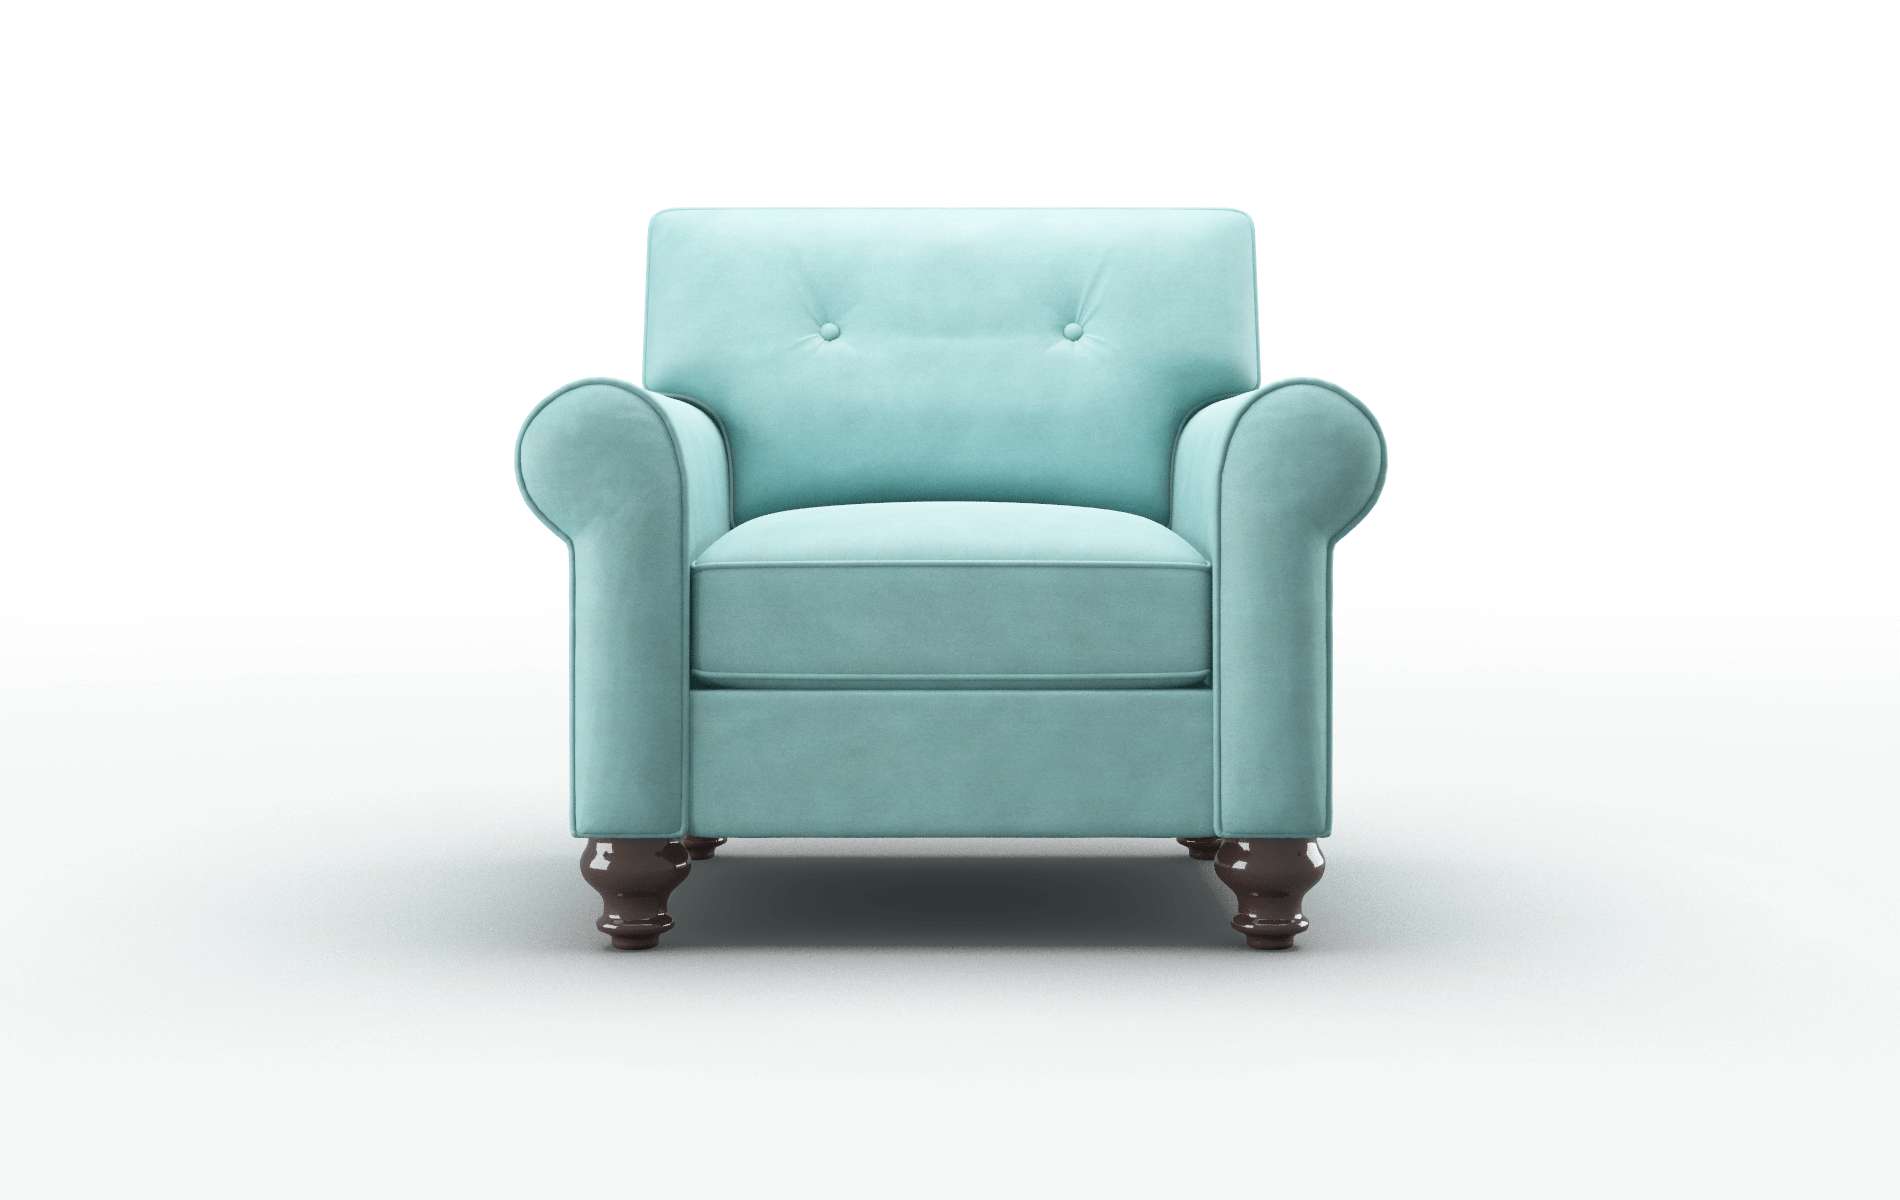 Farah Curious Turquoise Chair espresso legs 1